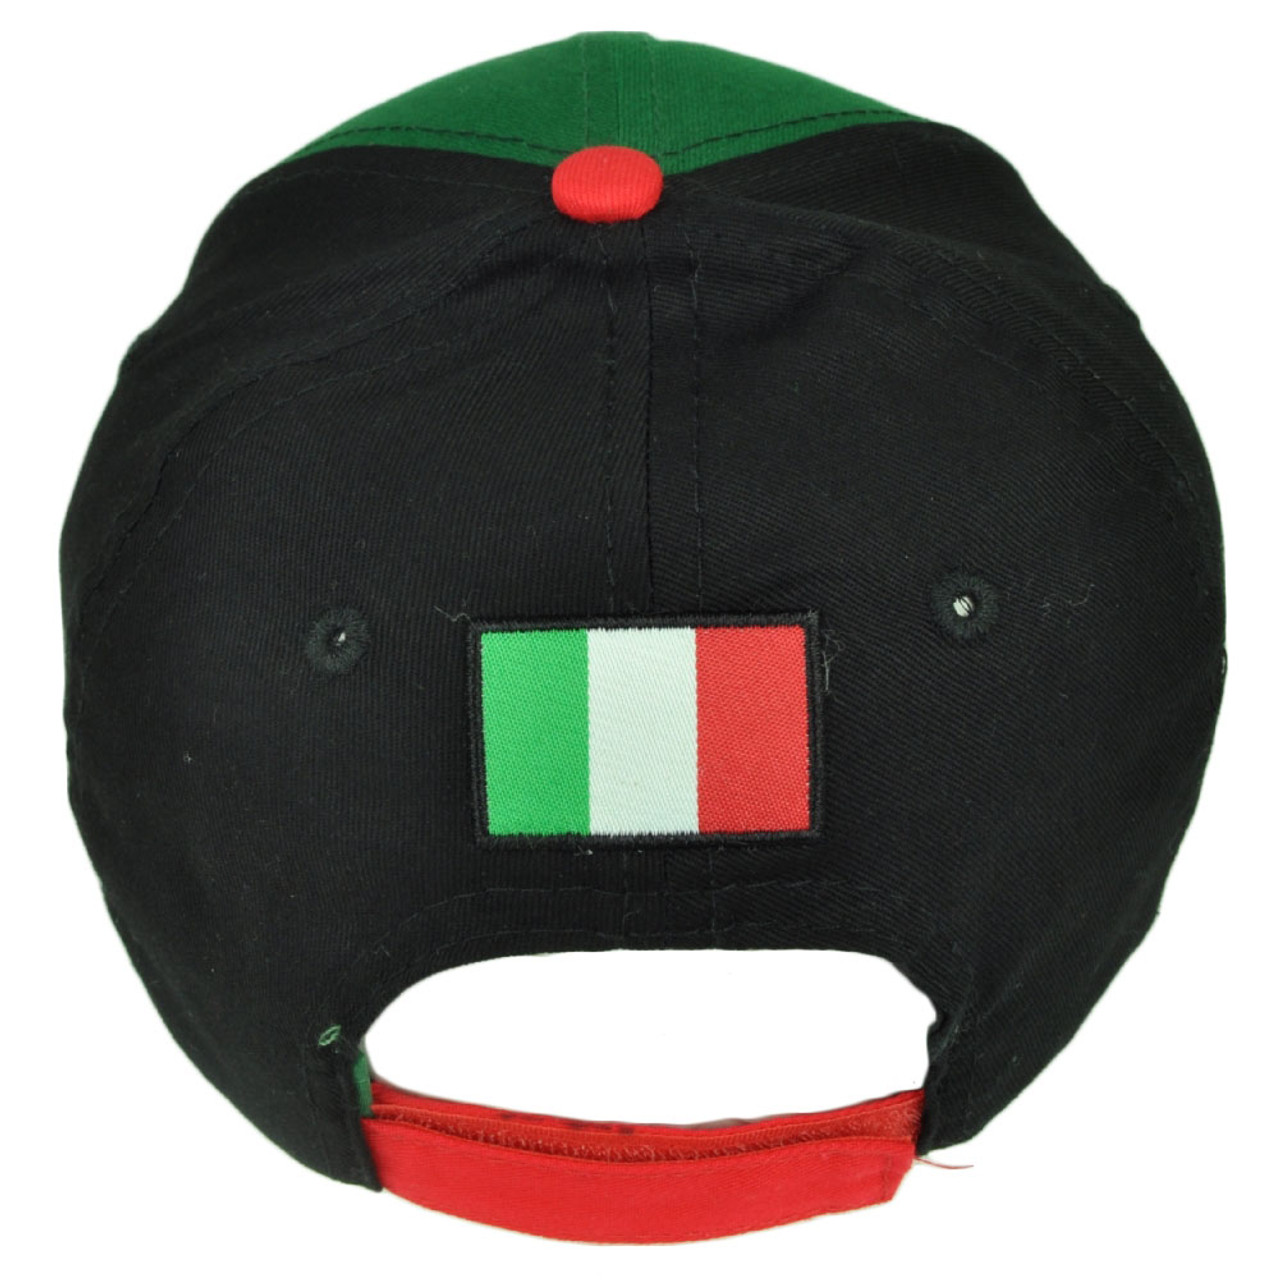 Nayarit Fuerte Y Poderoso Mexico Flag Adjustable Flat Bill Black Gorra Hat  Cap - Cap Store Online.com